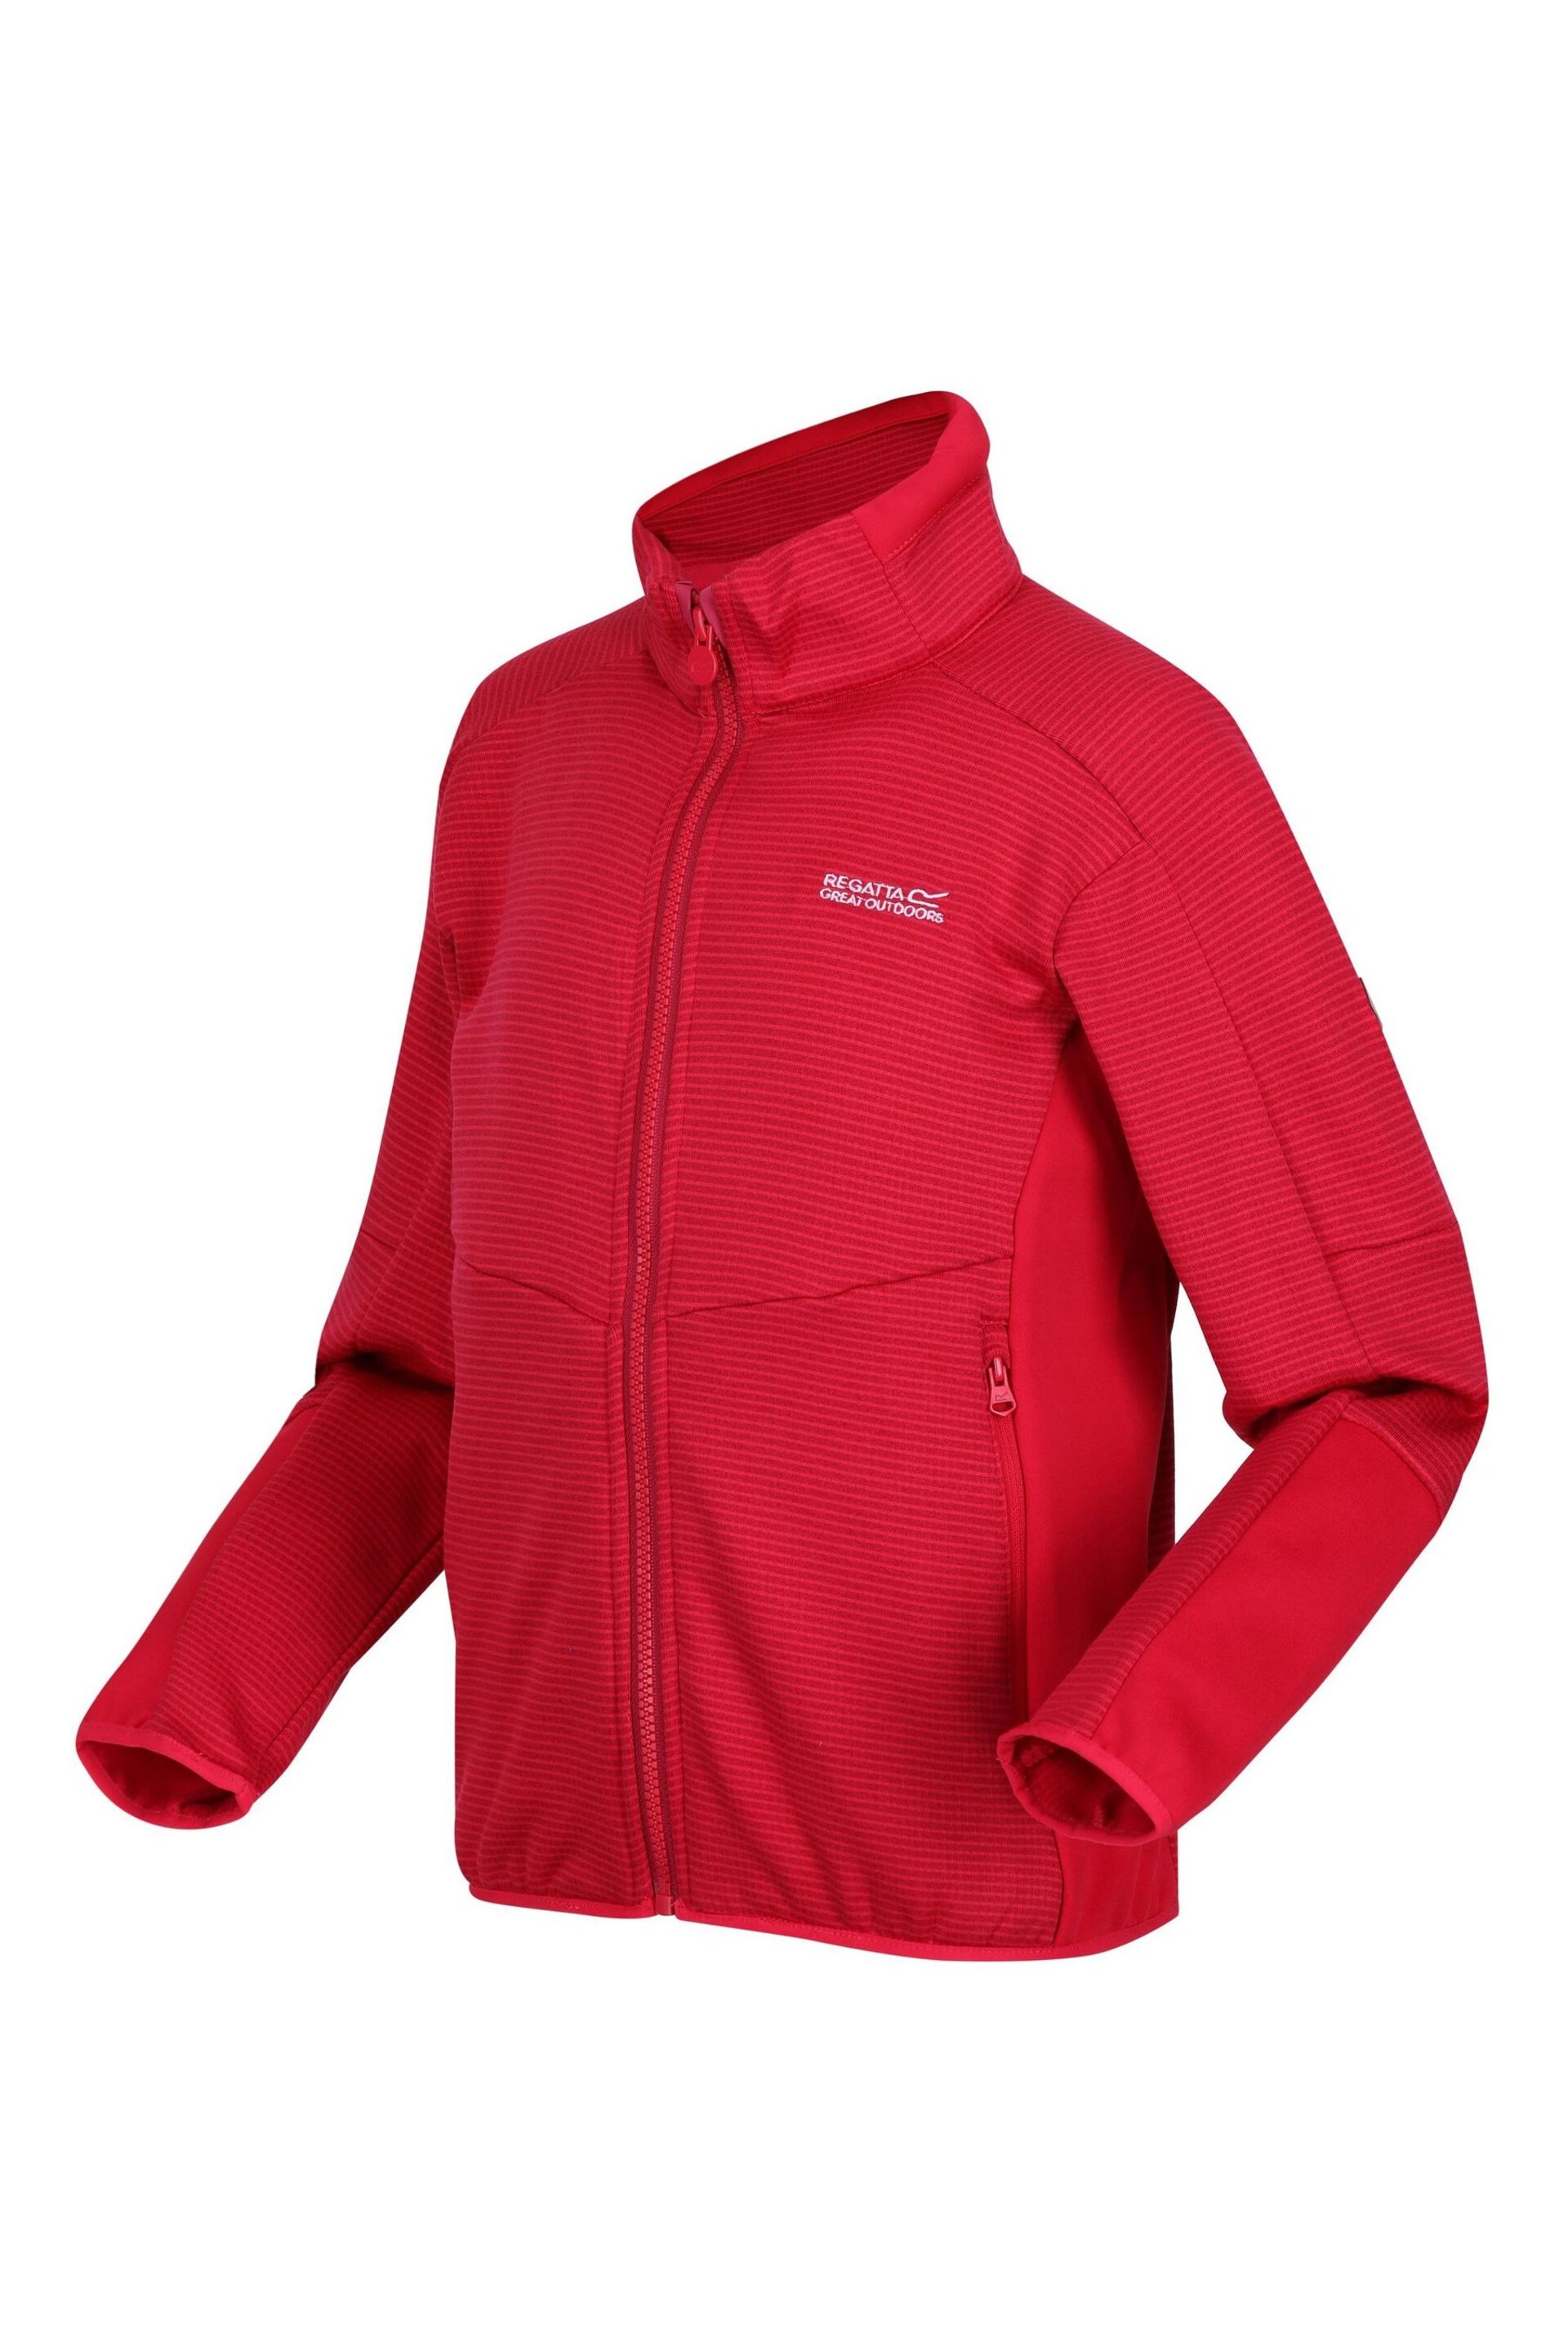 Regatta Red Junior Highton Winter Full Zip Fleece - Image 5 of 7